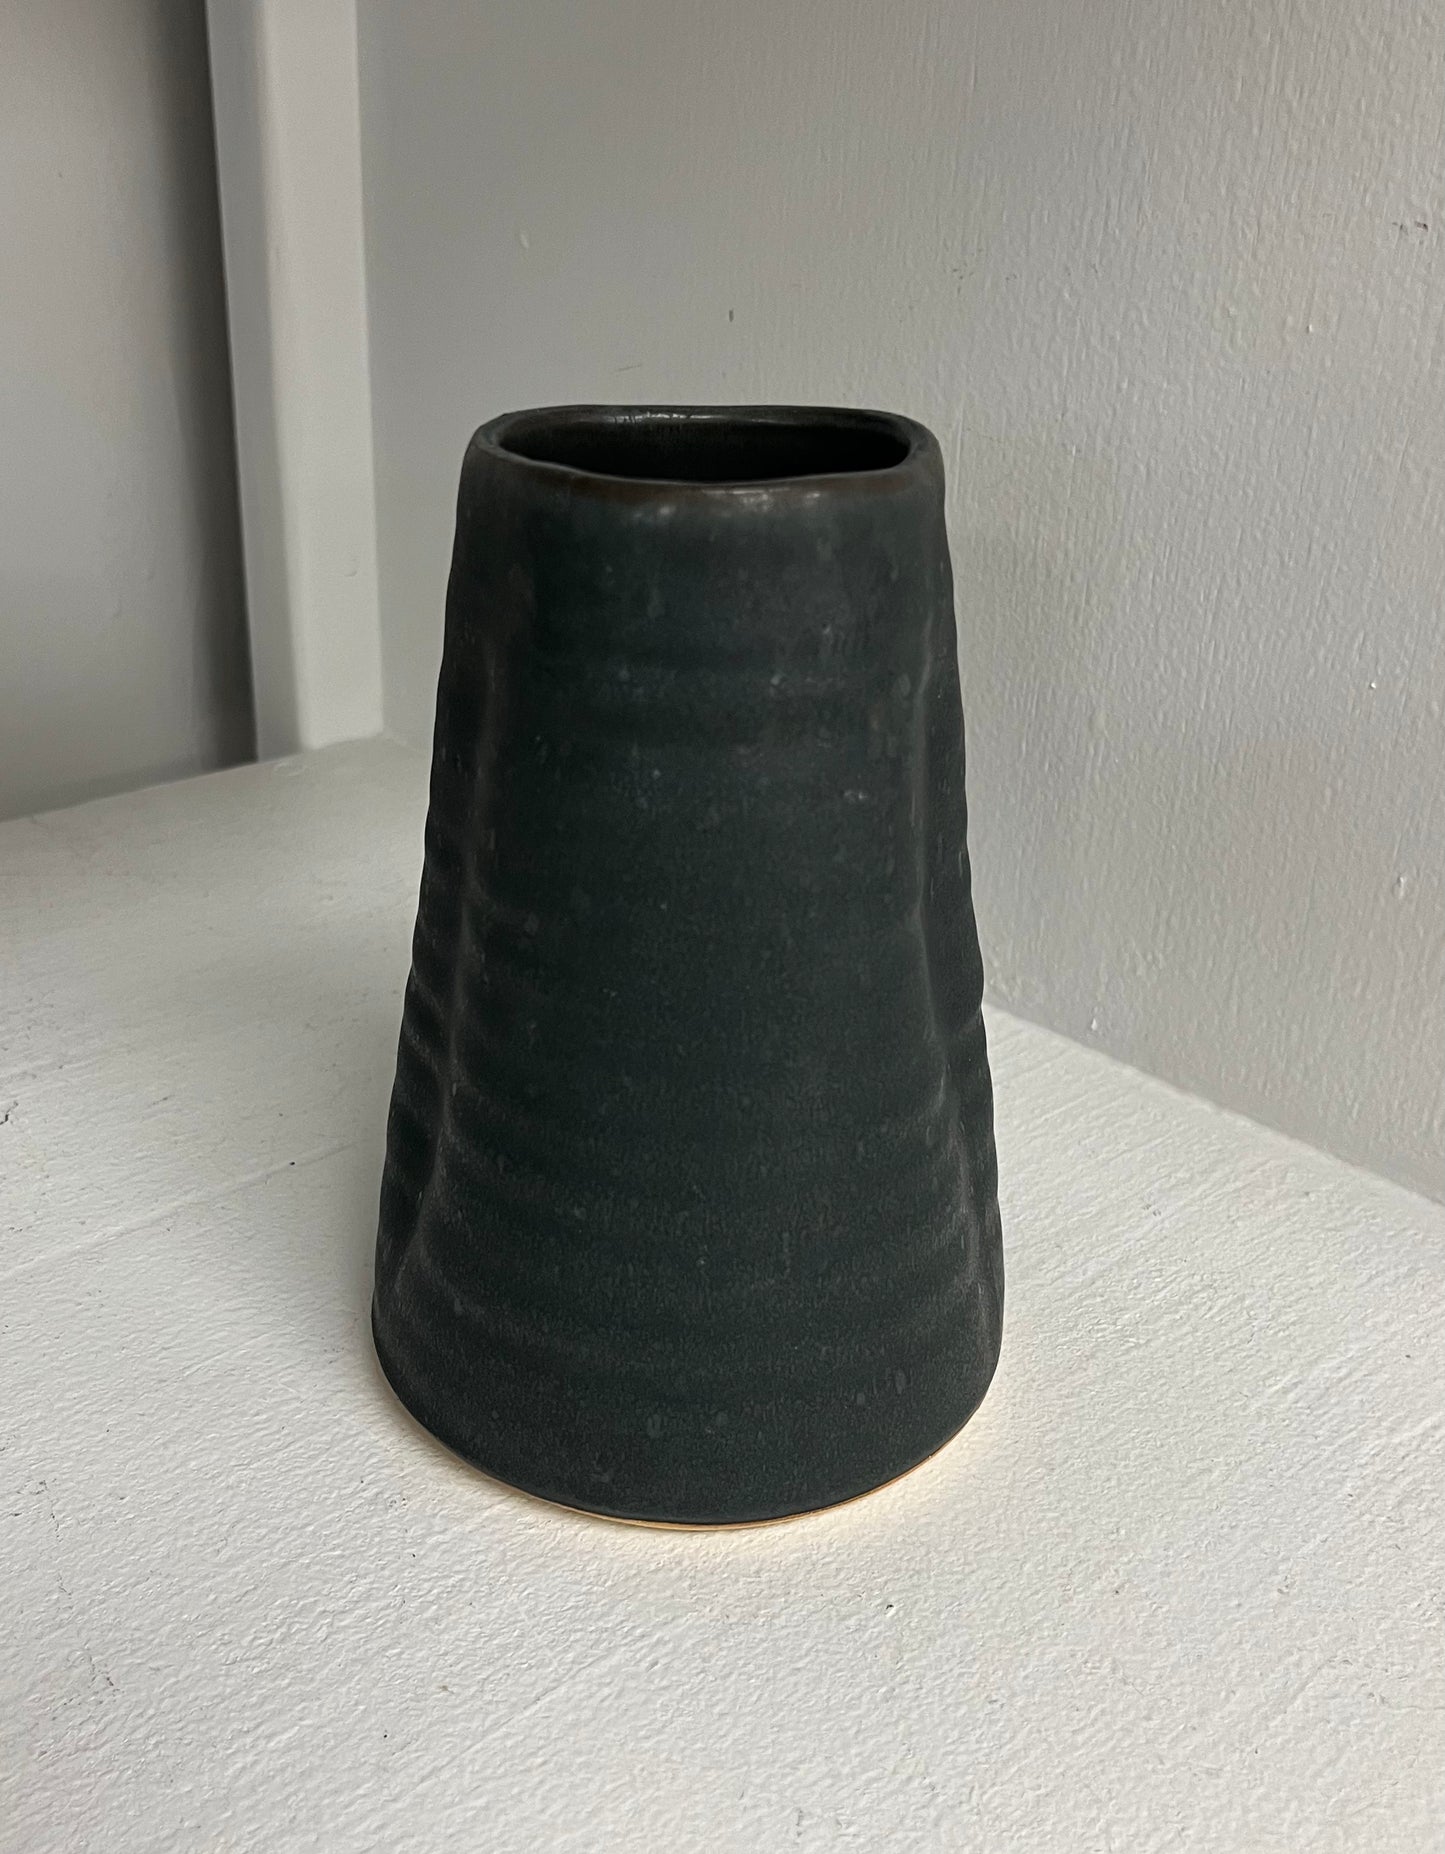 FP Vase in Peppercorn